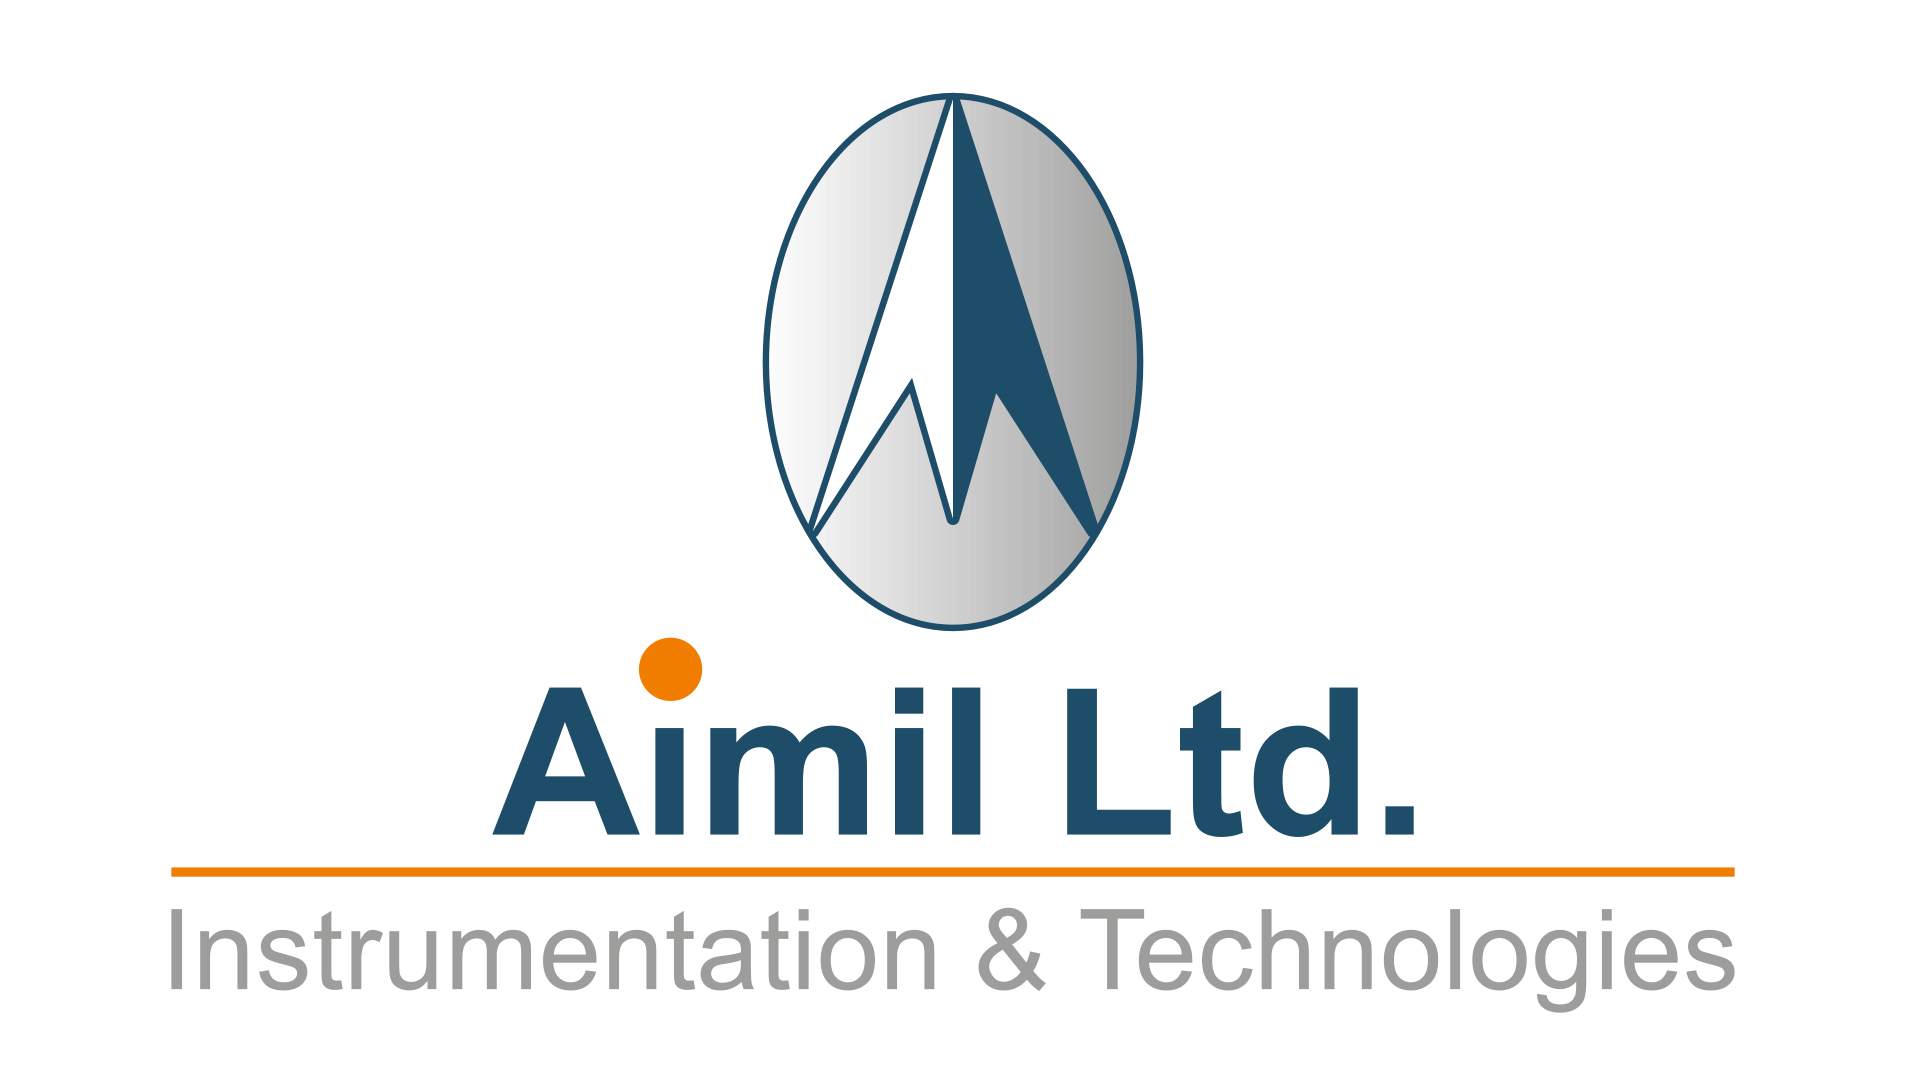 India - Aimil Ltd.